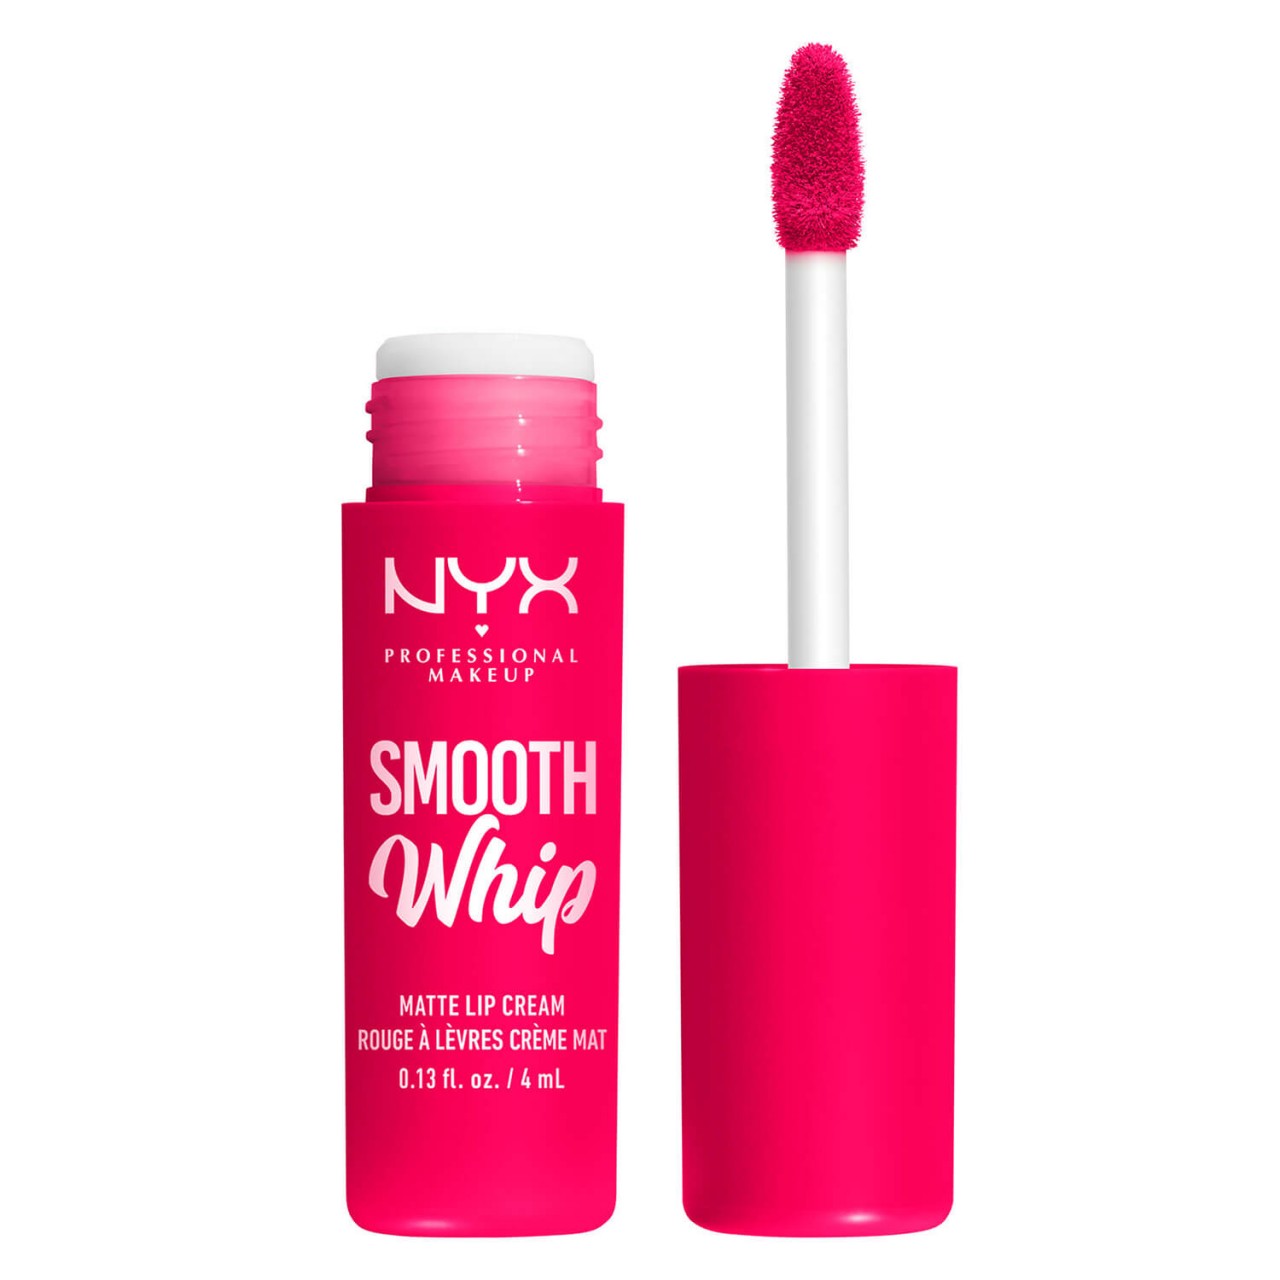 Smooth Whip Matte Lip Cream - Pillow Fight von NYX Professional Makeup